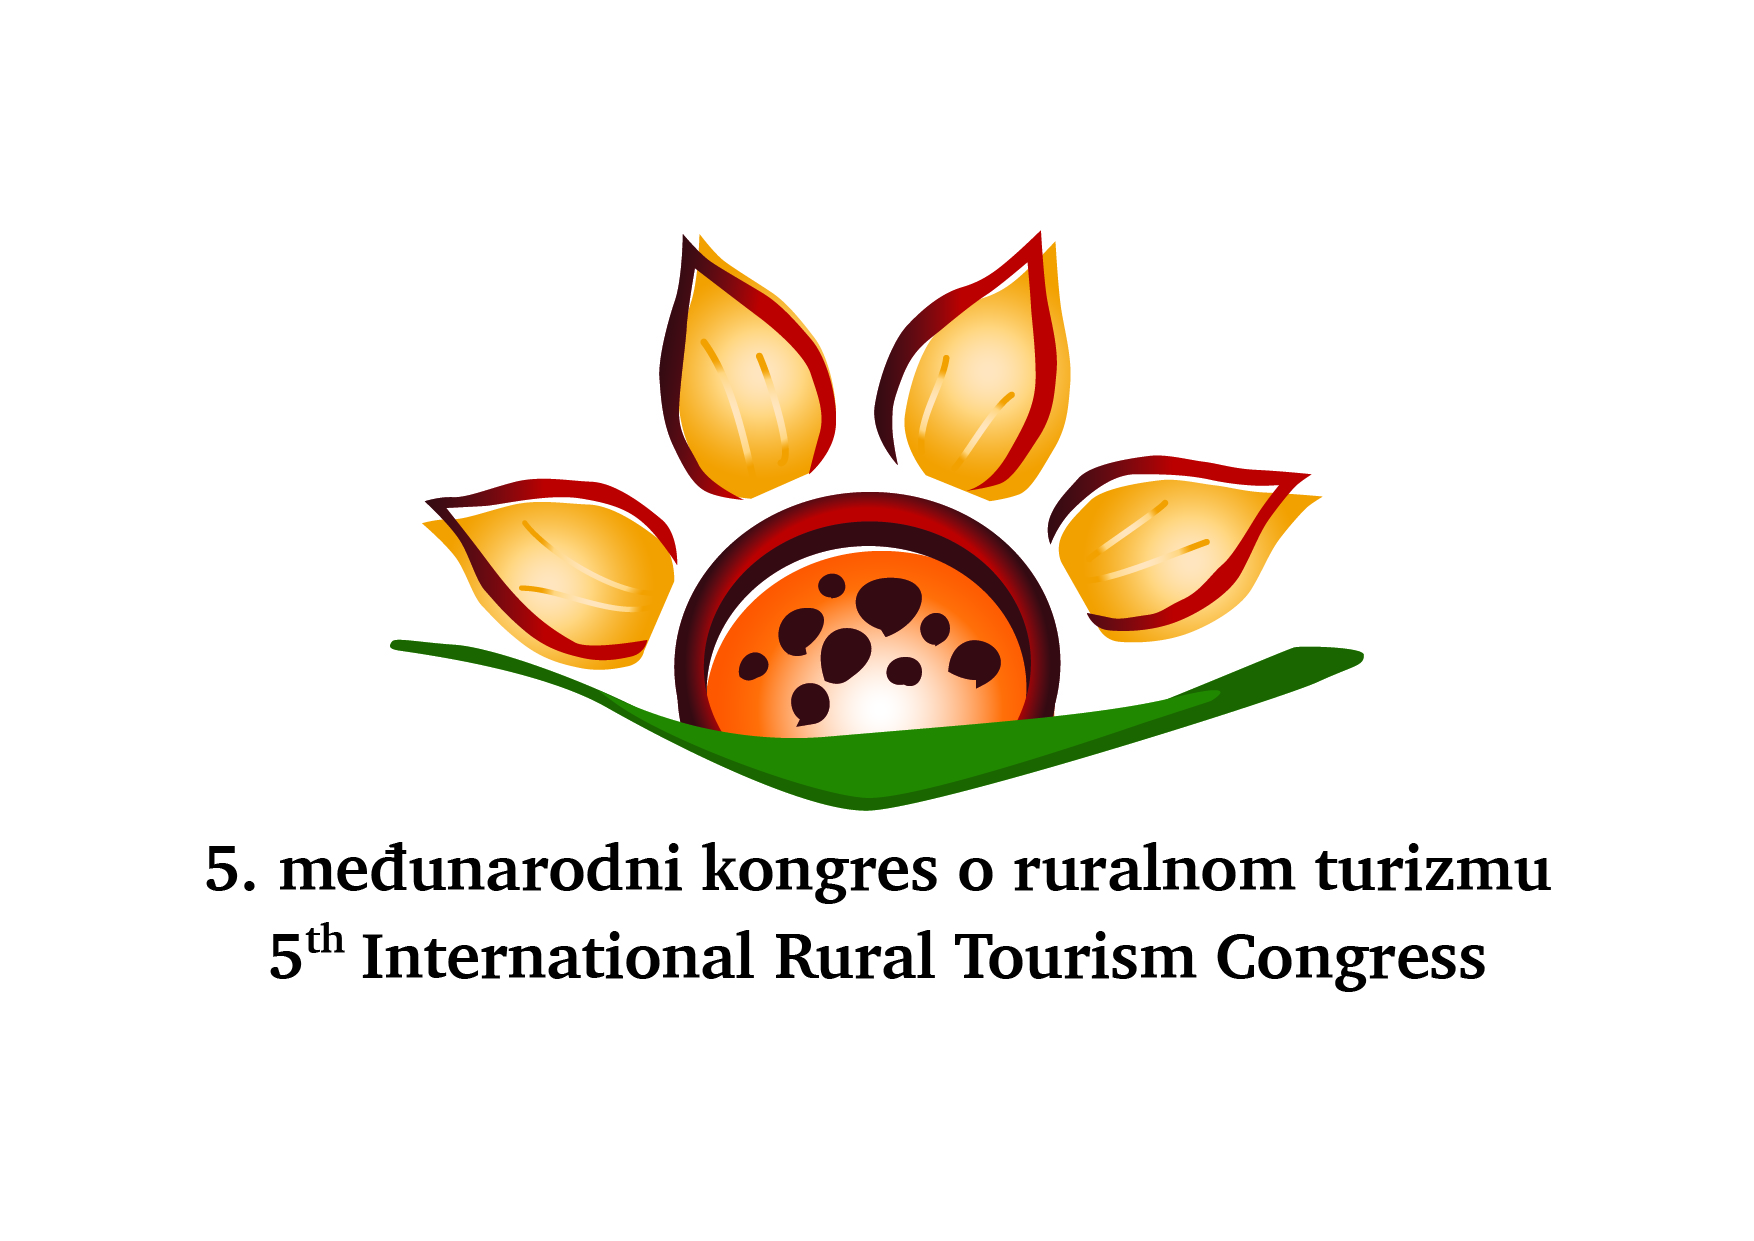 Croatian Association for Tourism and Rural Development “Klub članova Selo”